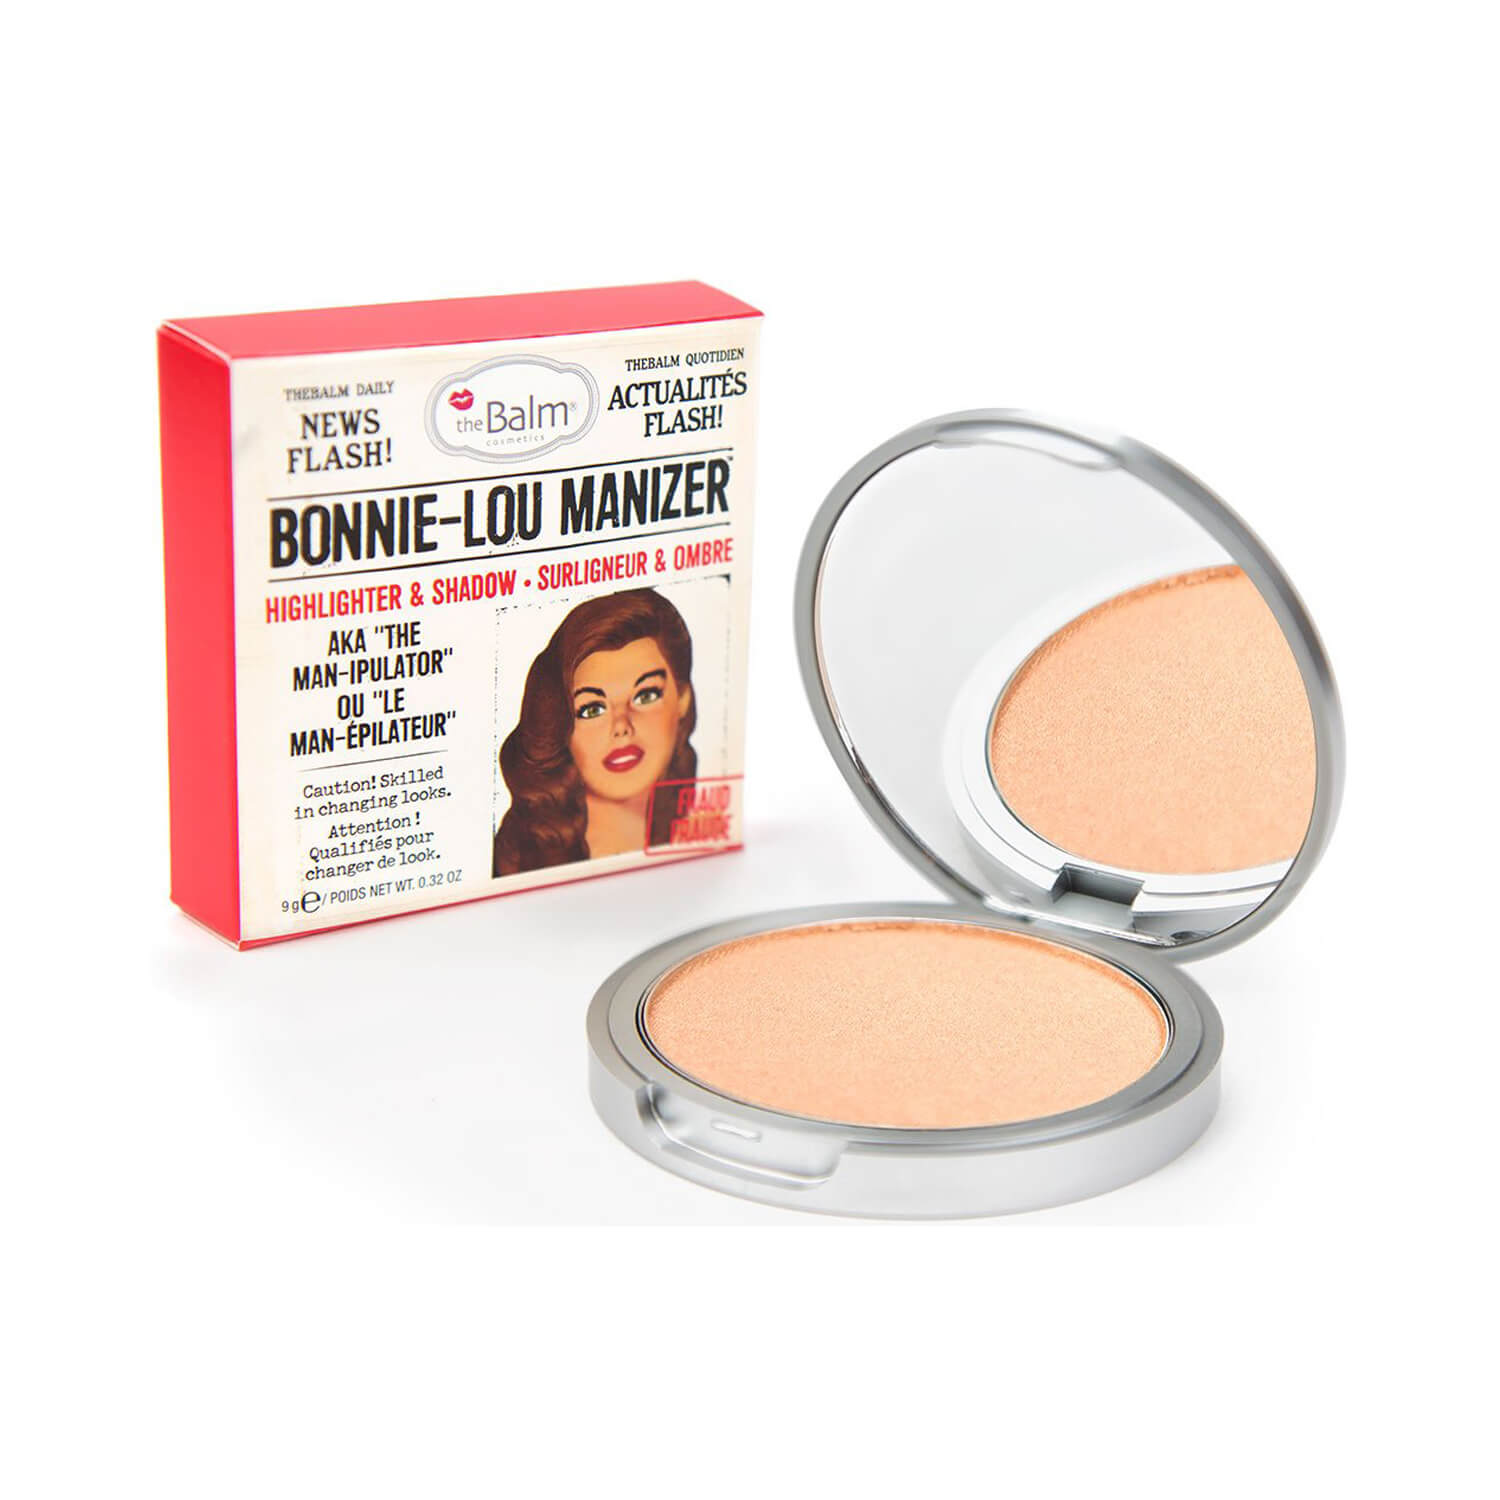 theBalm Bonnie-Lou Manizer Highlighter & Shimmer